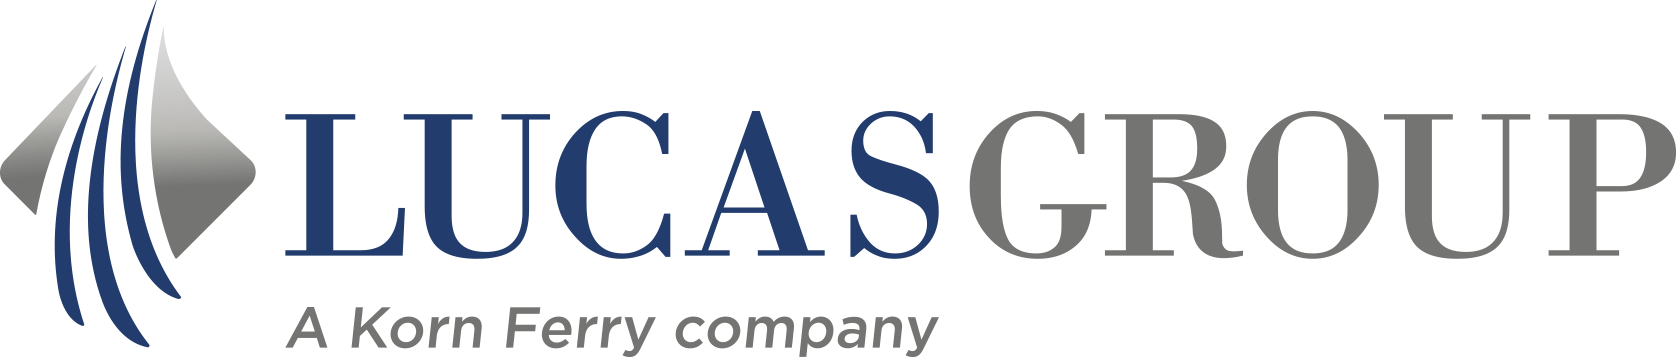 Lucas Group Company Logo